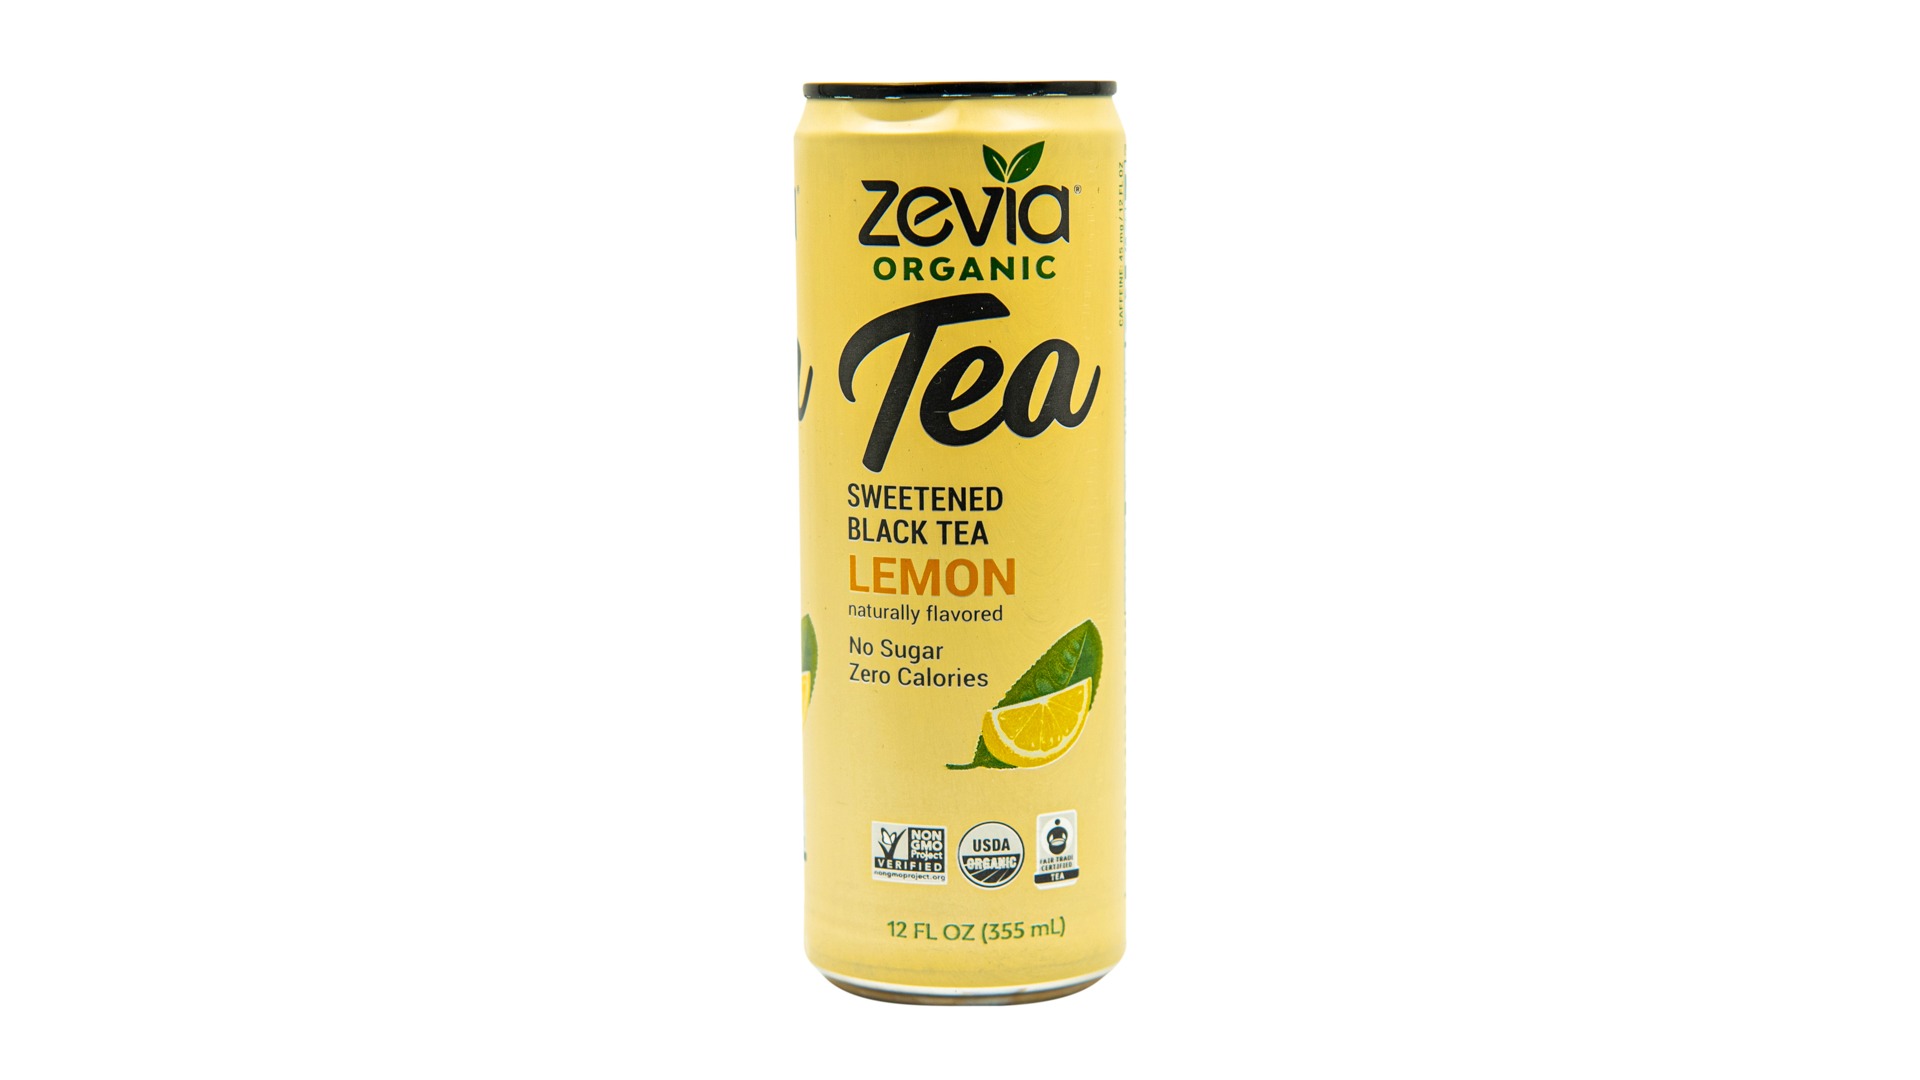 Lemon Black Tea (Zevia)